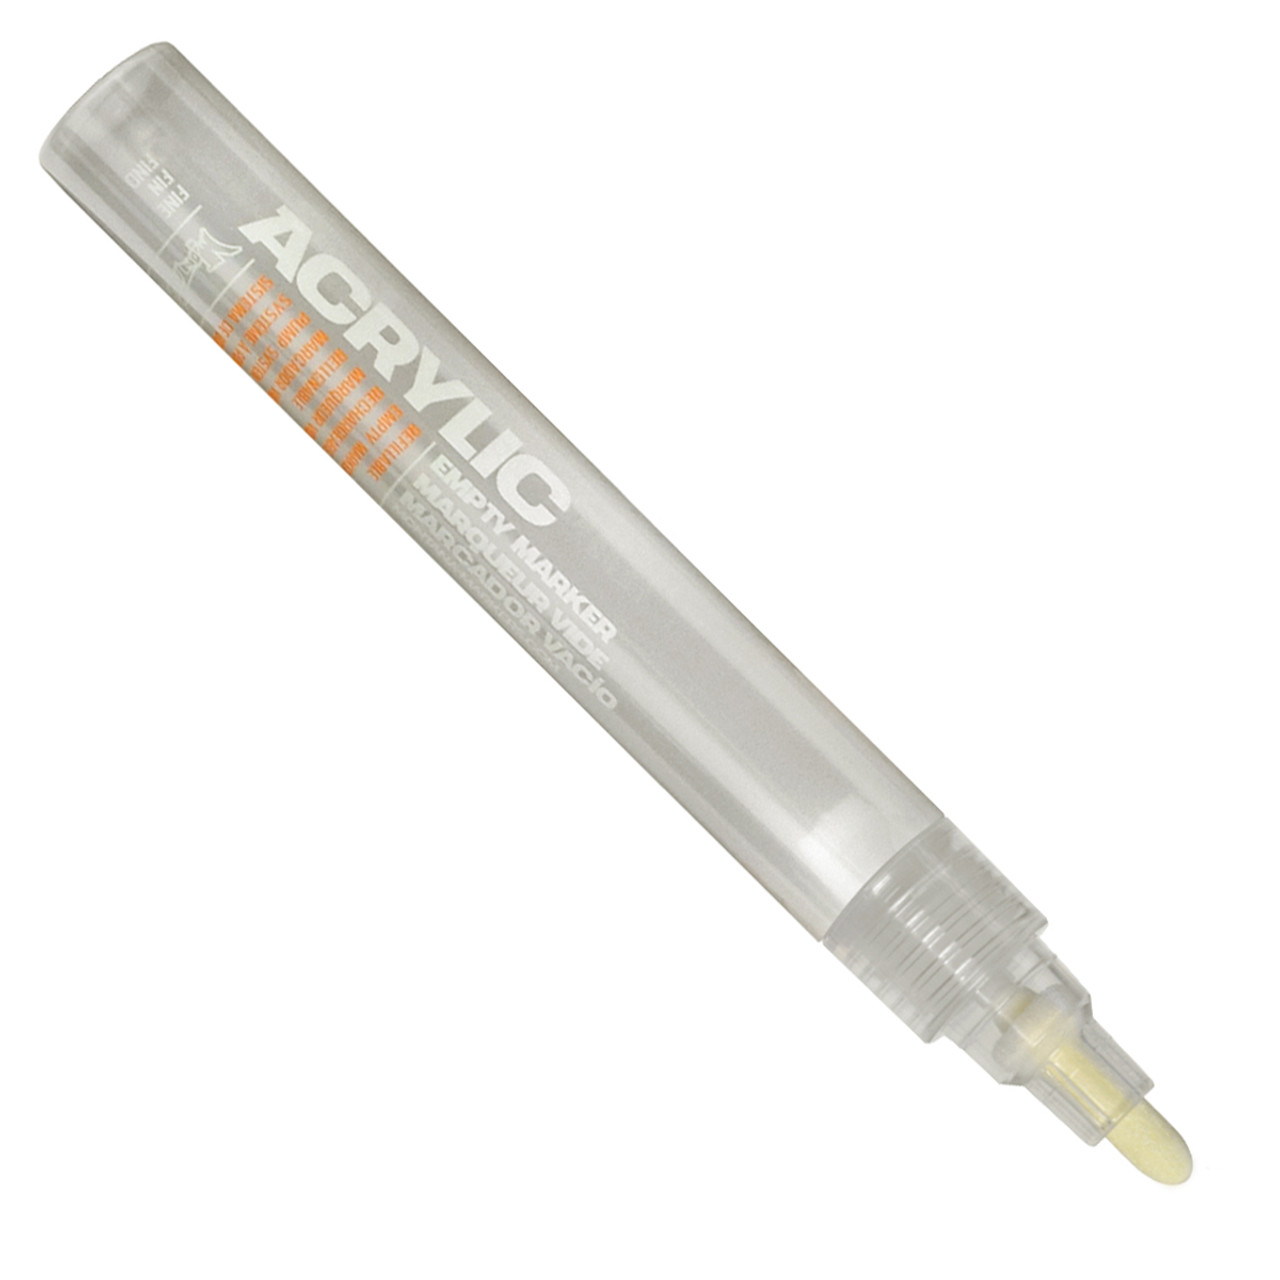 Fine Tip Pens 4 Pack (Permanent Oil Based Markers) for Transparent